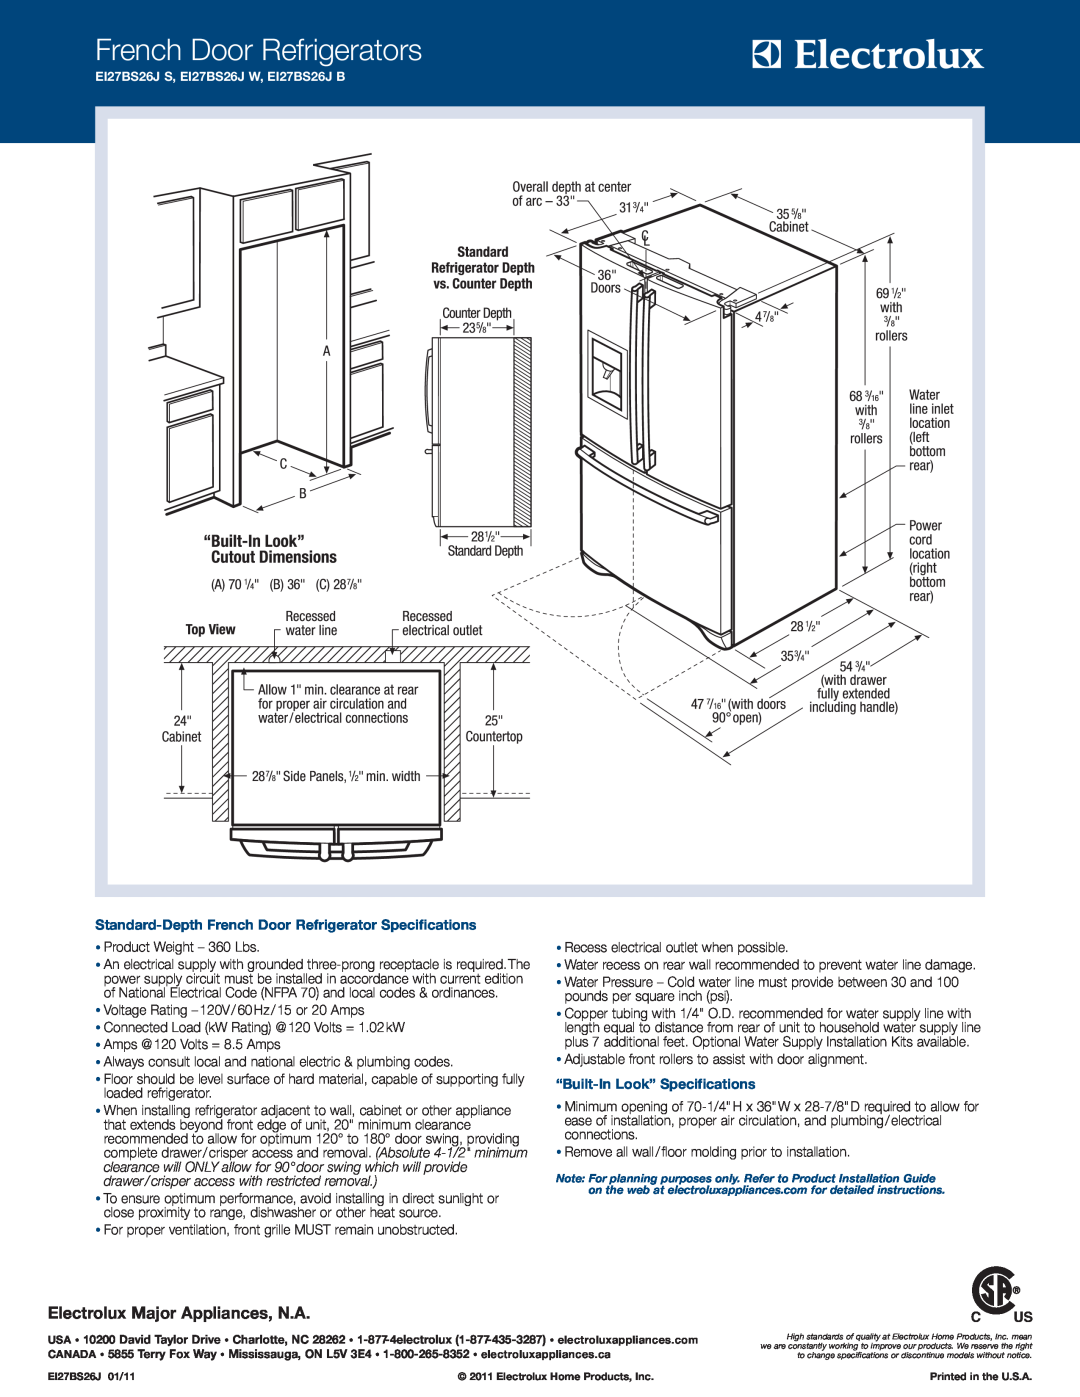 Electrolux EI27BS26J B French Door Refrigerators, Electrolux Major Appliances, N.A, “Built-In Look” Specifications 